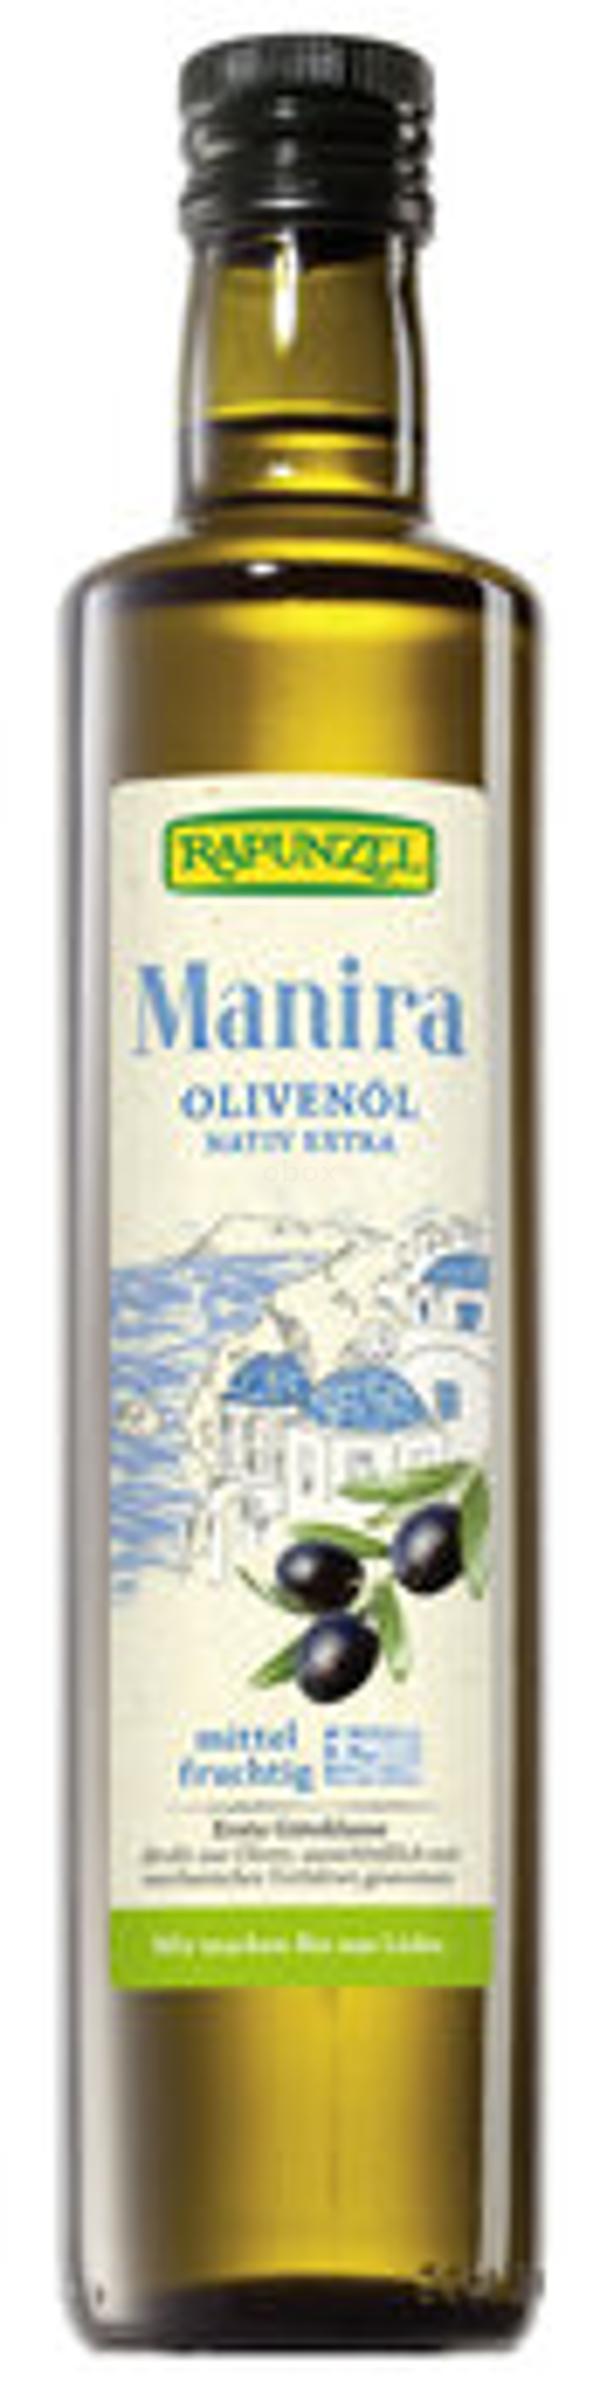 Produktfoto zu Olivenöl Manira nativ extra, 0,5 l